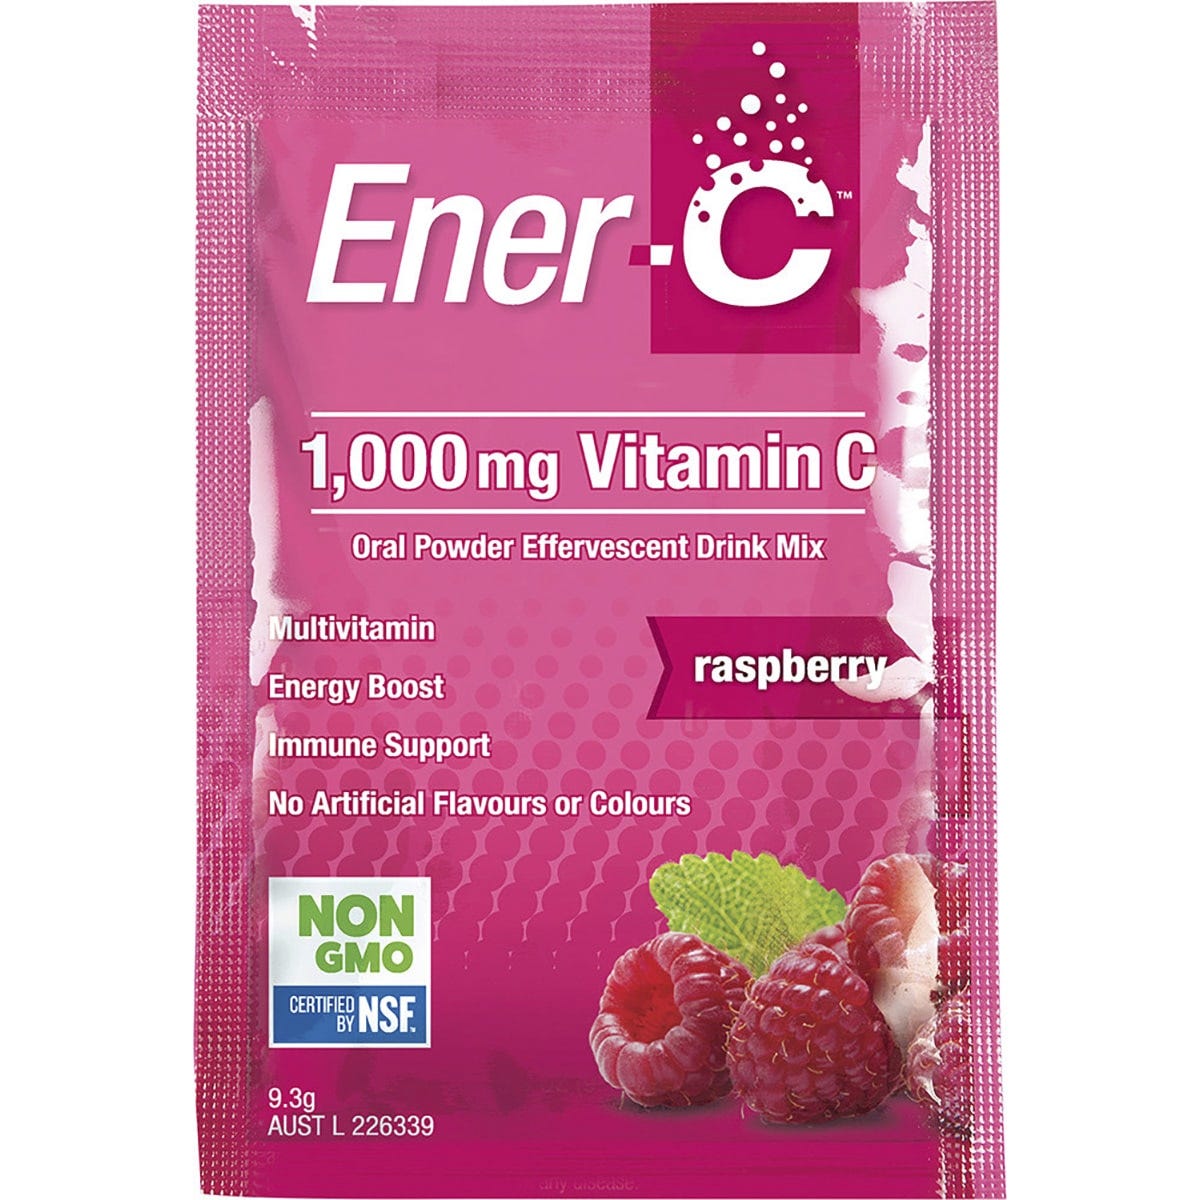 Martin & Pleasance Ener-C 1000mg Vitamin C Drink Mix Raspberry Sachets